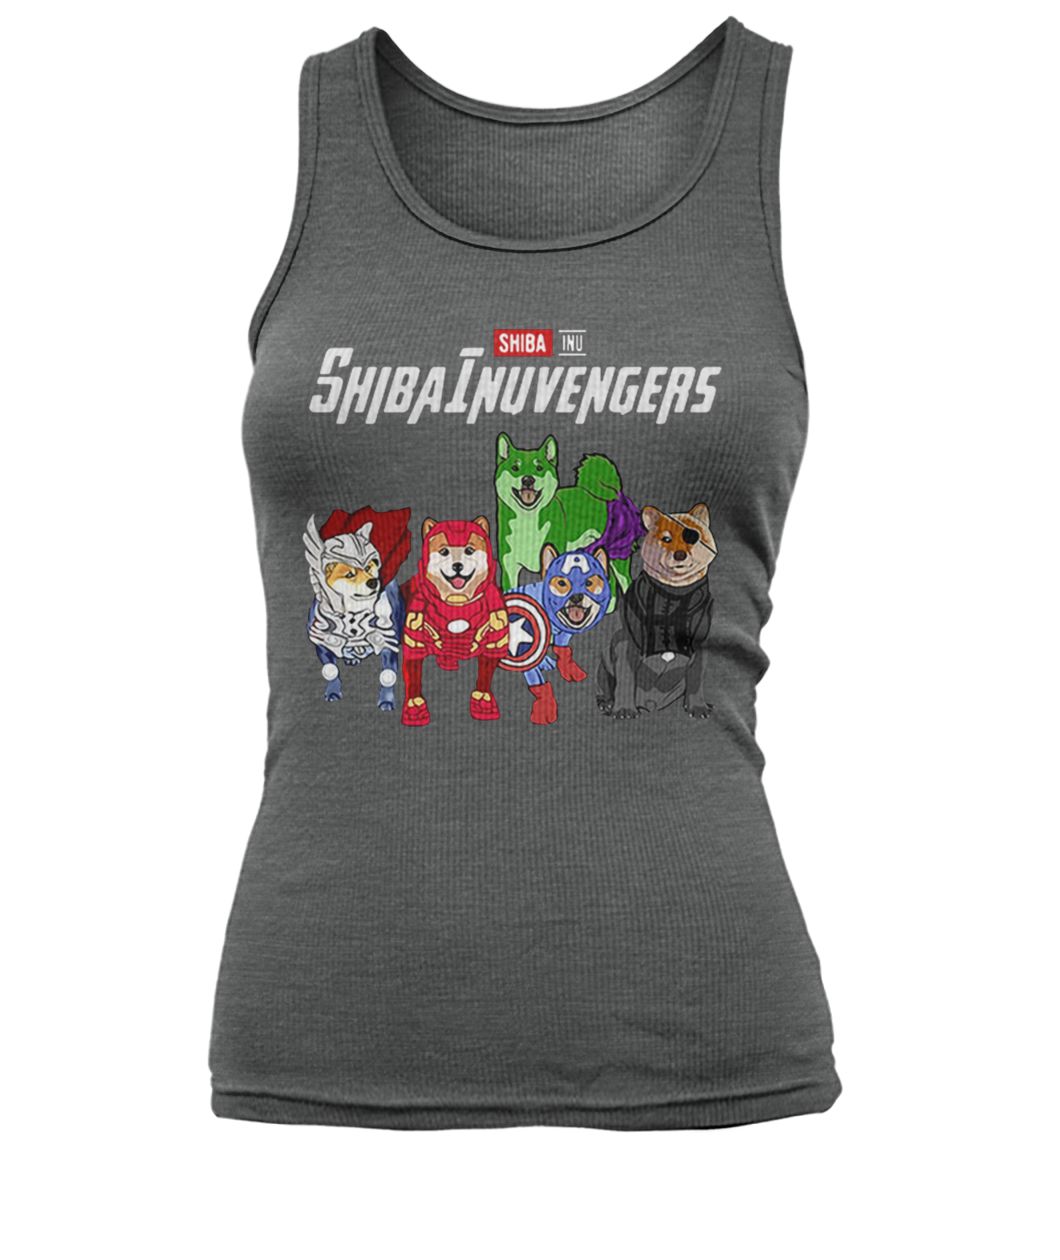 Marvel avengers endgame shibainuvengers shiba inu women's tank top